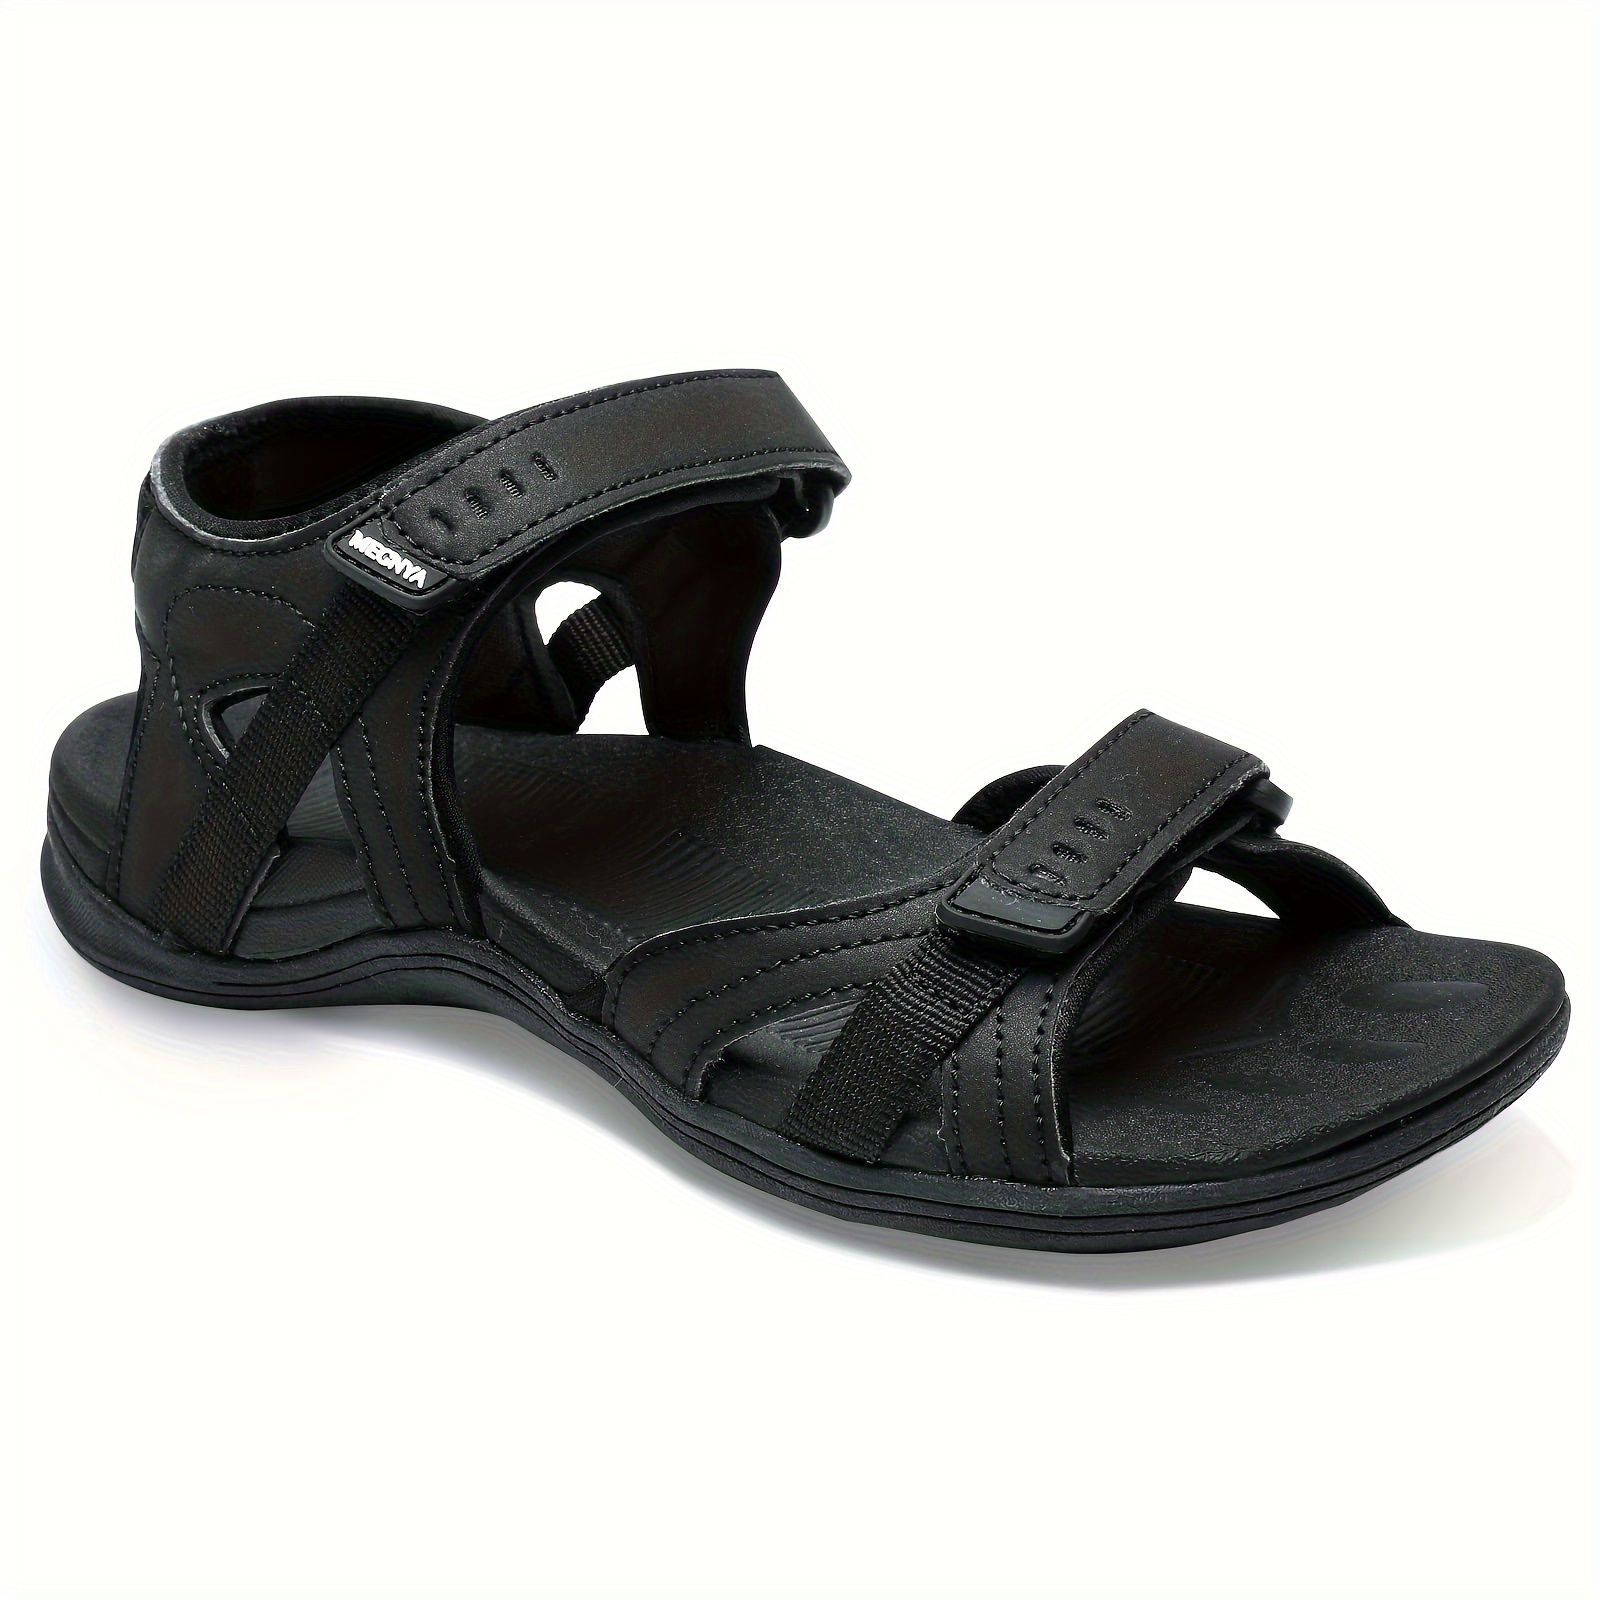 

Megnya Womens River Hiking Sandals, Outdoor Non Slip Walking Sandals With Adjustable Straps, Soft Lightweight Sandals